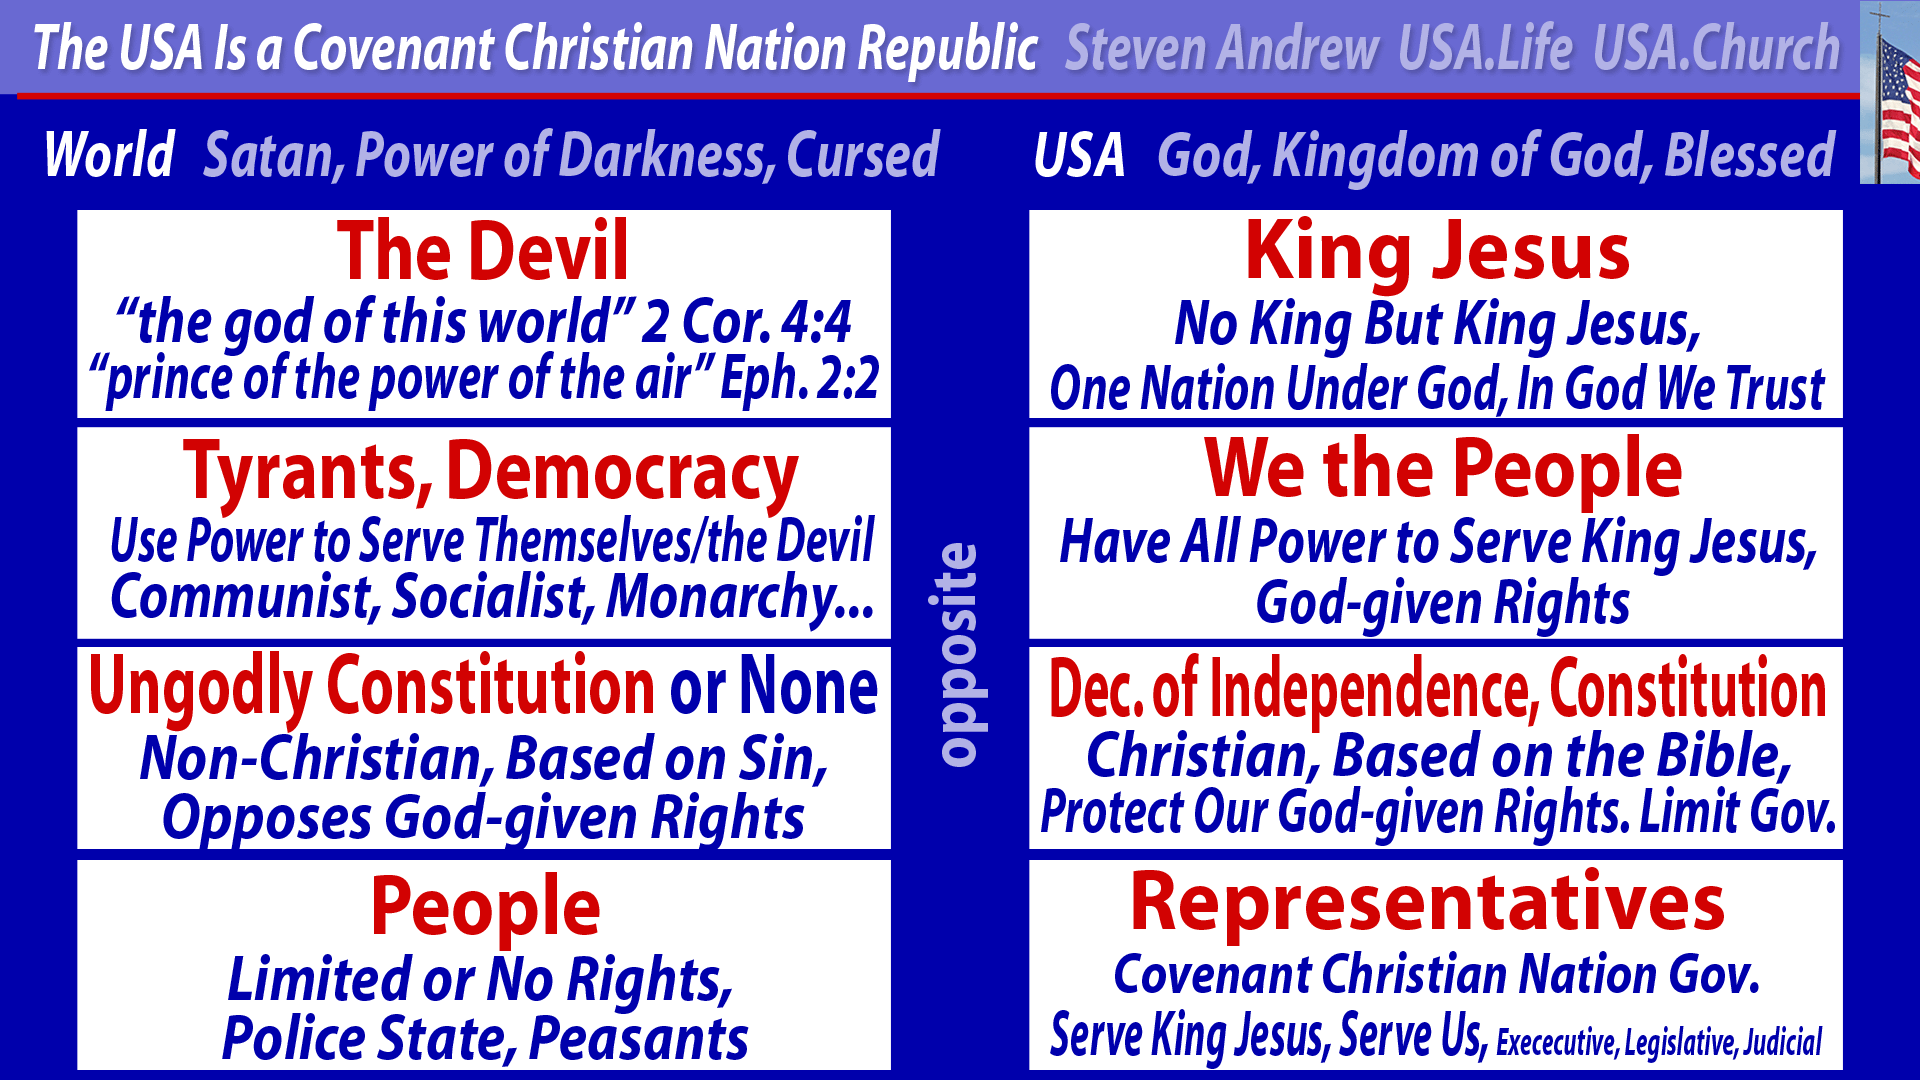 USA is One nation Under God, King Jesus, Kingdom of God, covenant Christian nation, Covenant Christian Republic, Steven Andrew